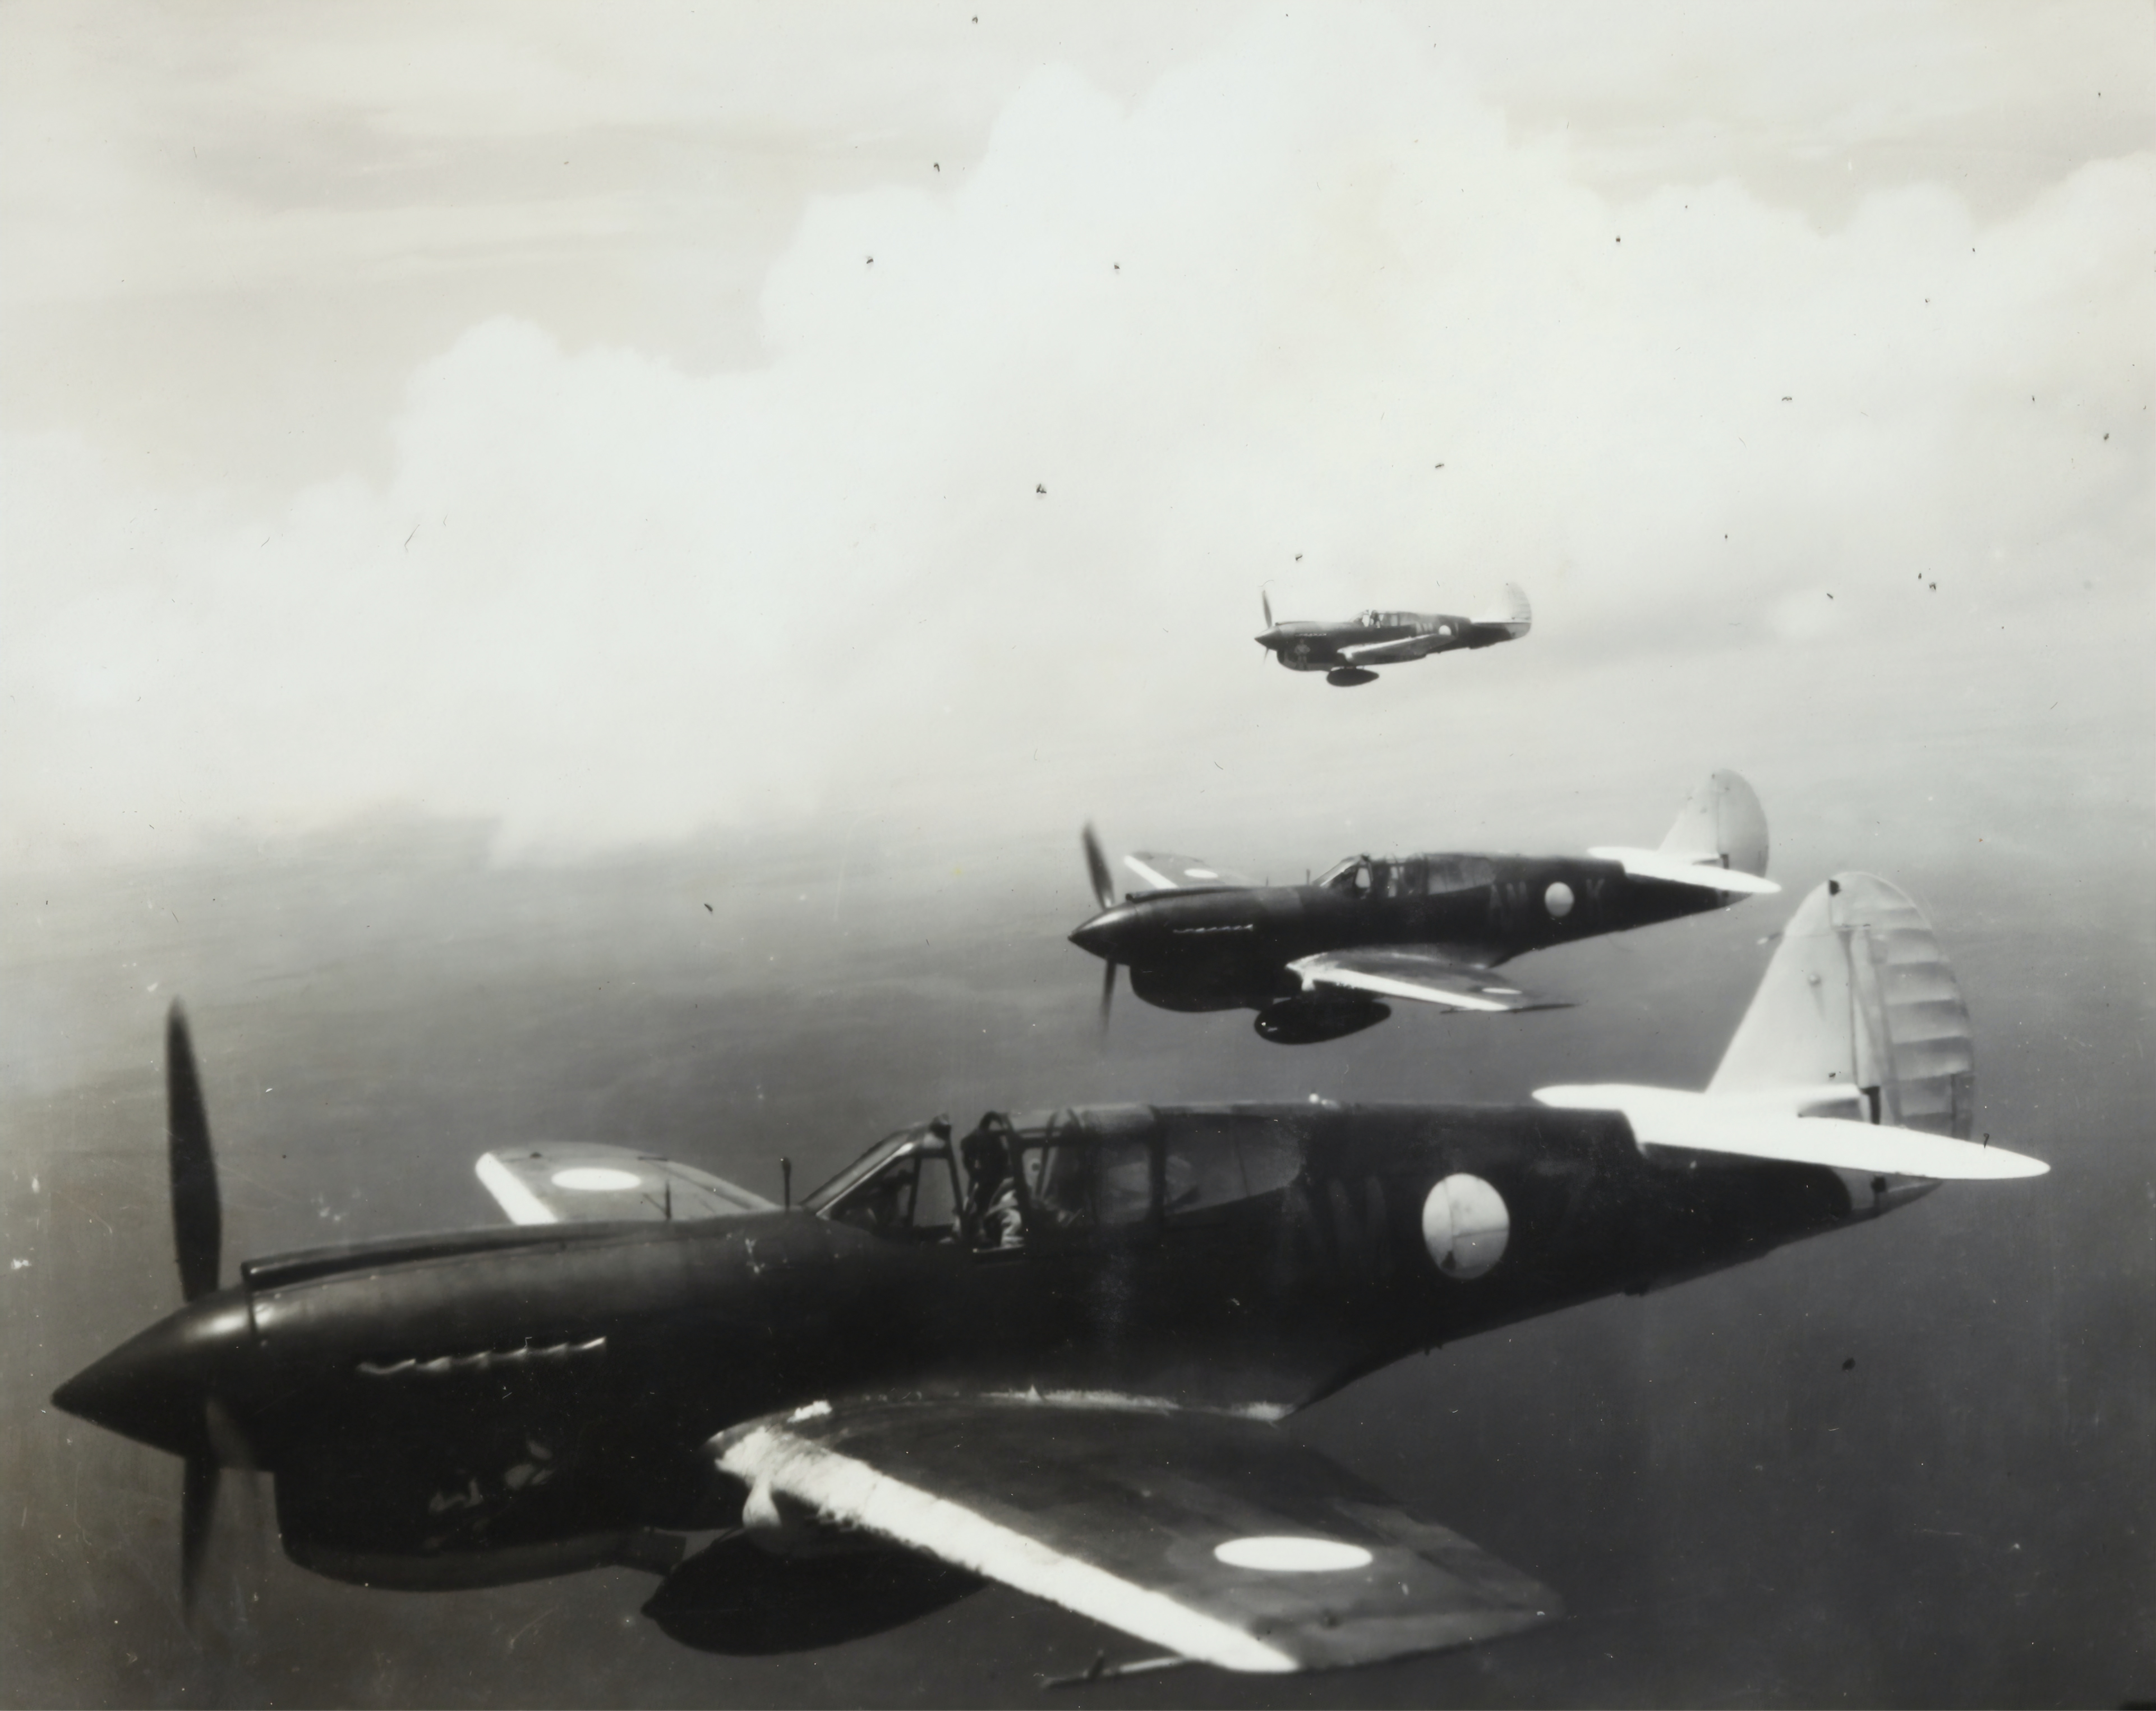 Three WW2 planes in formation